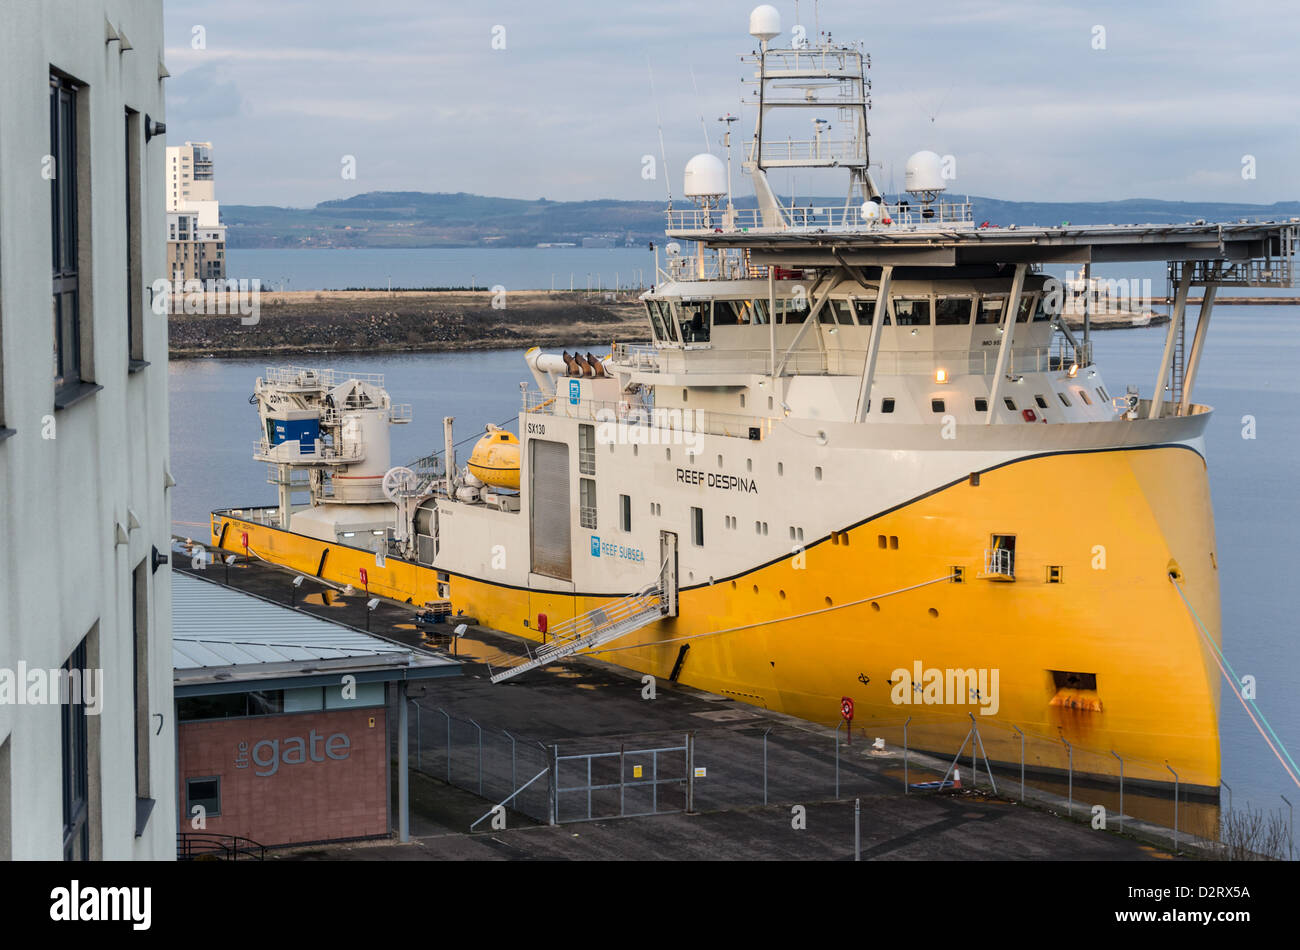 Reef Despina - North Sea oil multi purpose support vessel built 2011. In port, Leith, Scotland, January 2013. Stock Photo